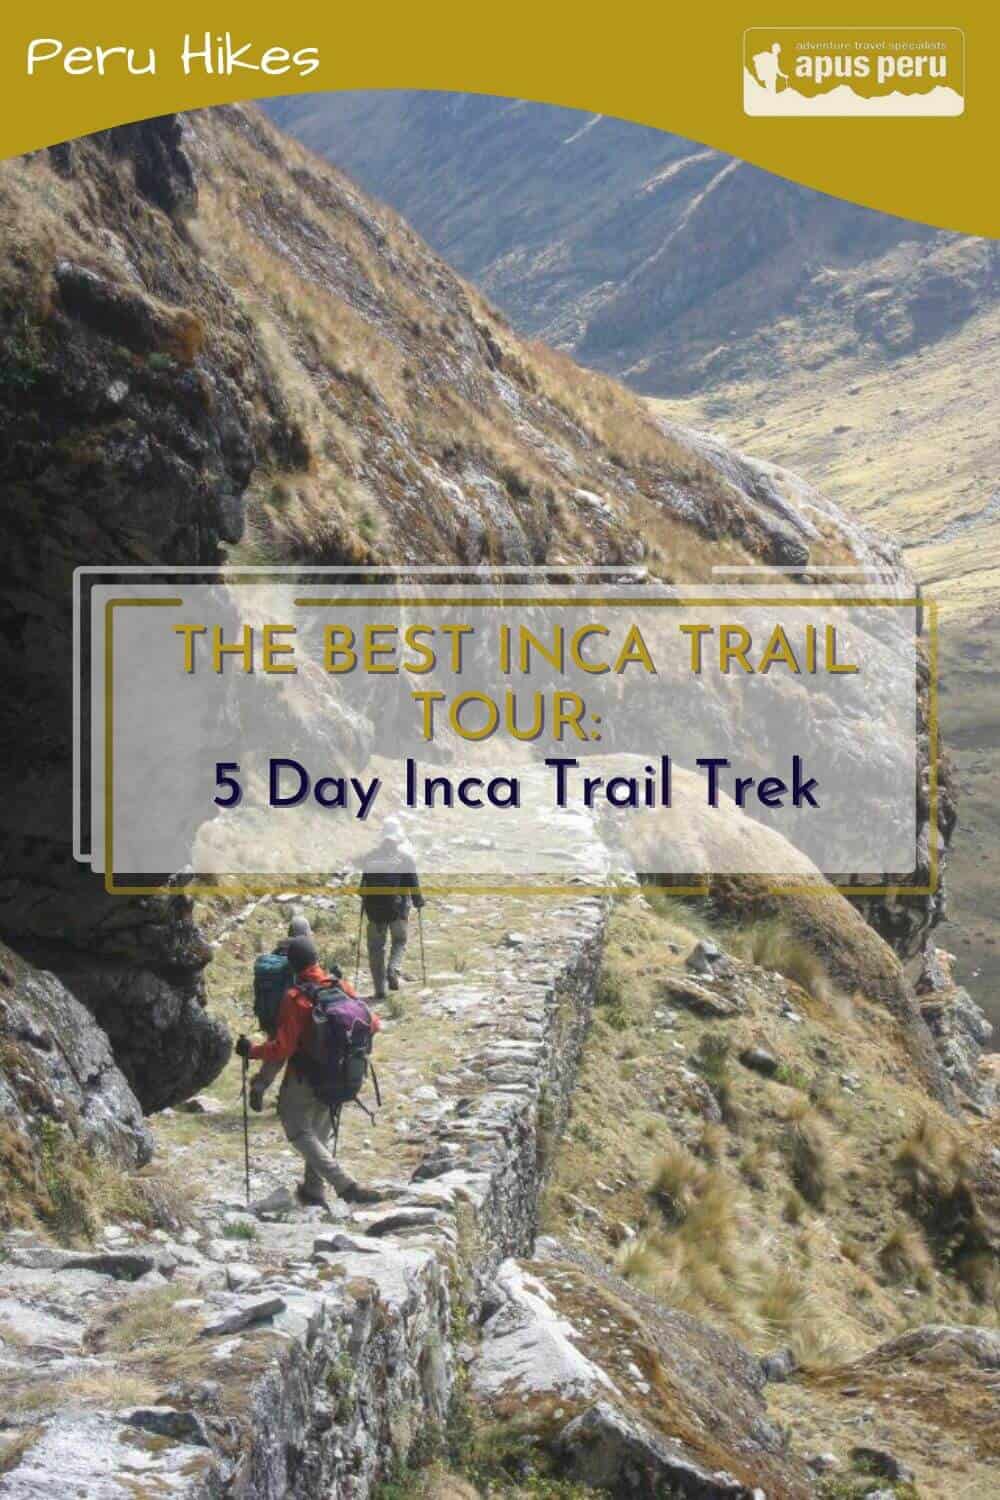 The Best Inca Trail Tour 5 Day Inca Trail Trek